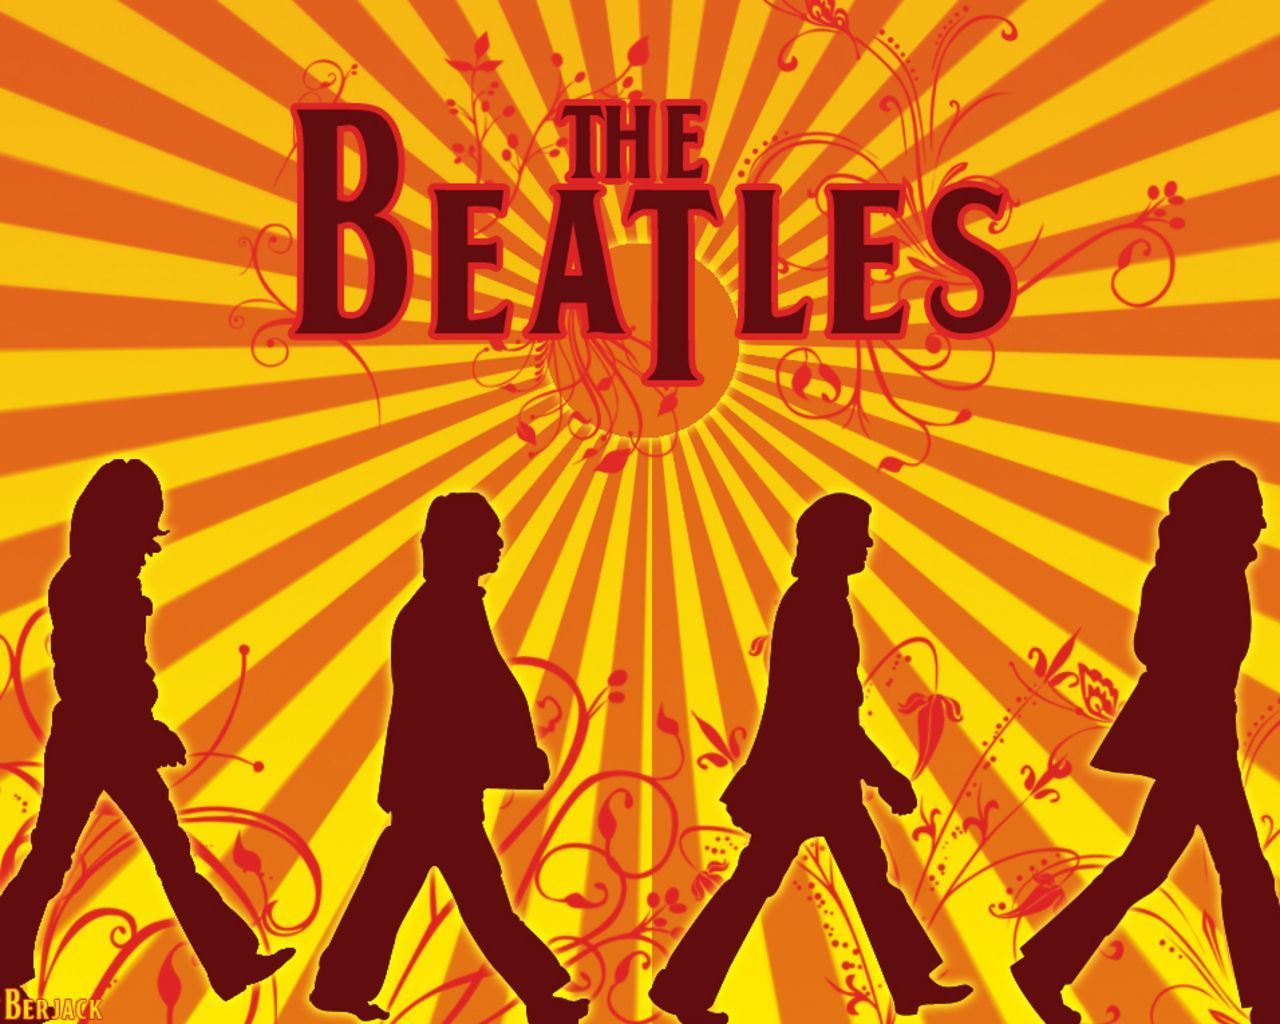 The Beatles Wallpaper - Classic Rock Wallpaper 20405011 - Fanpop